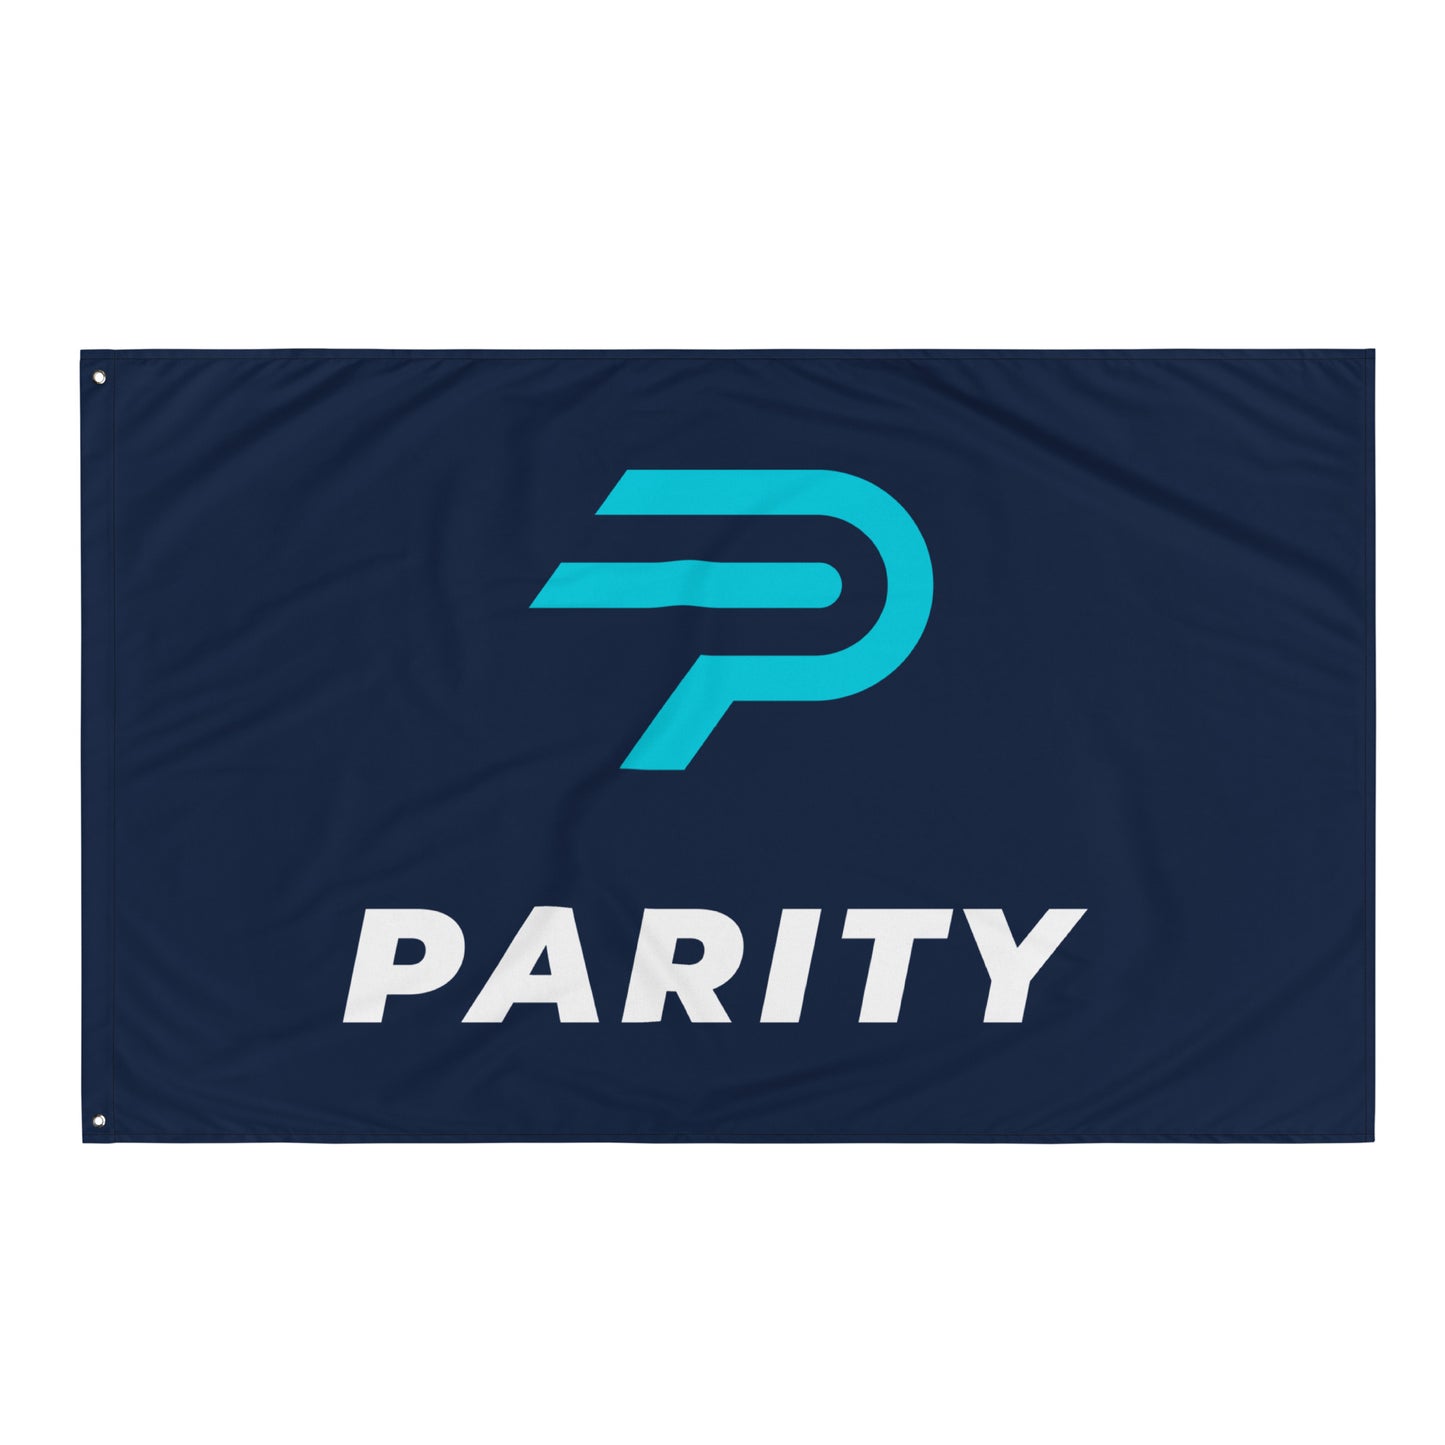 Parity Flag